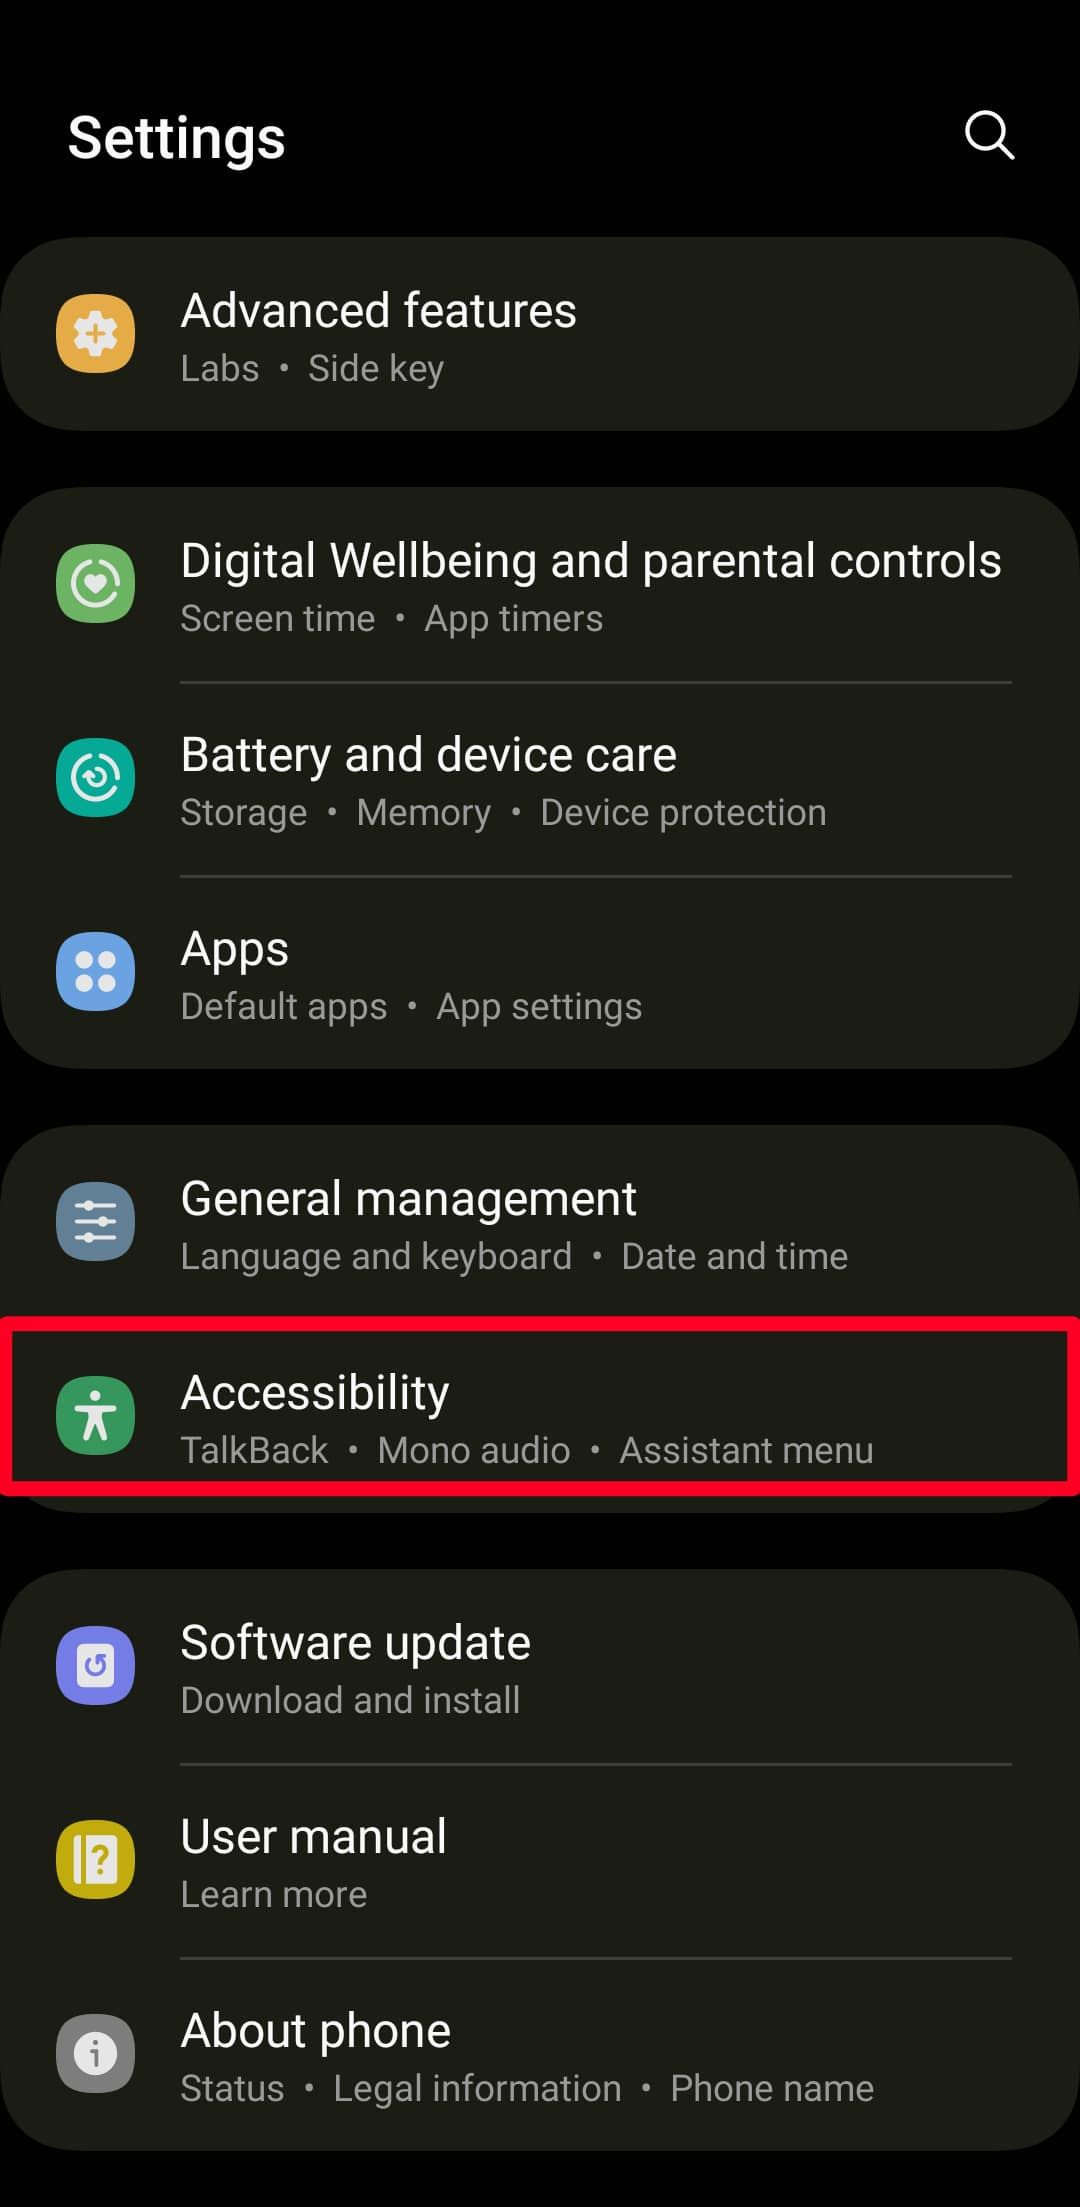 Samsung settings menu on Android 13